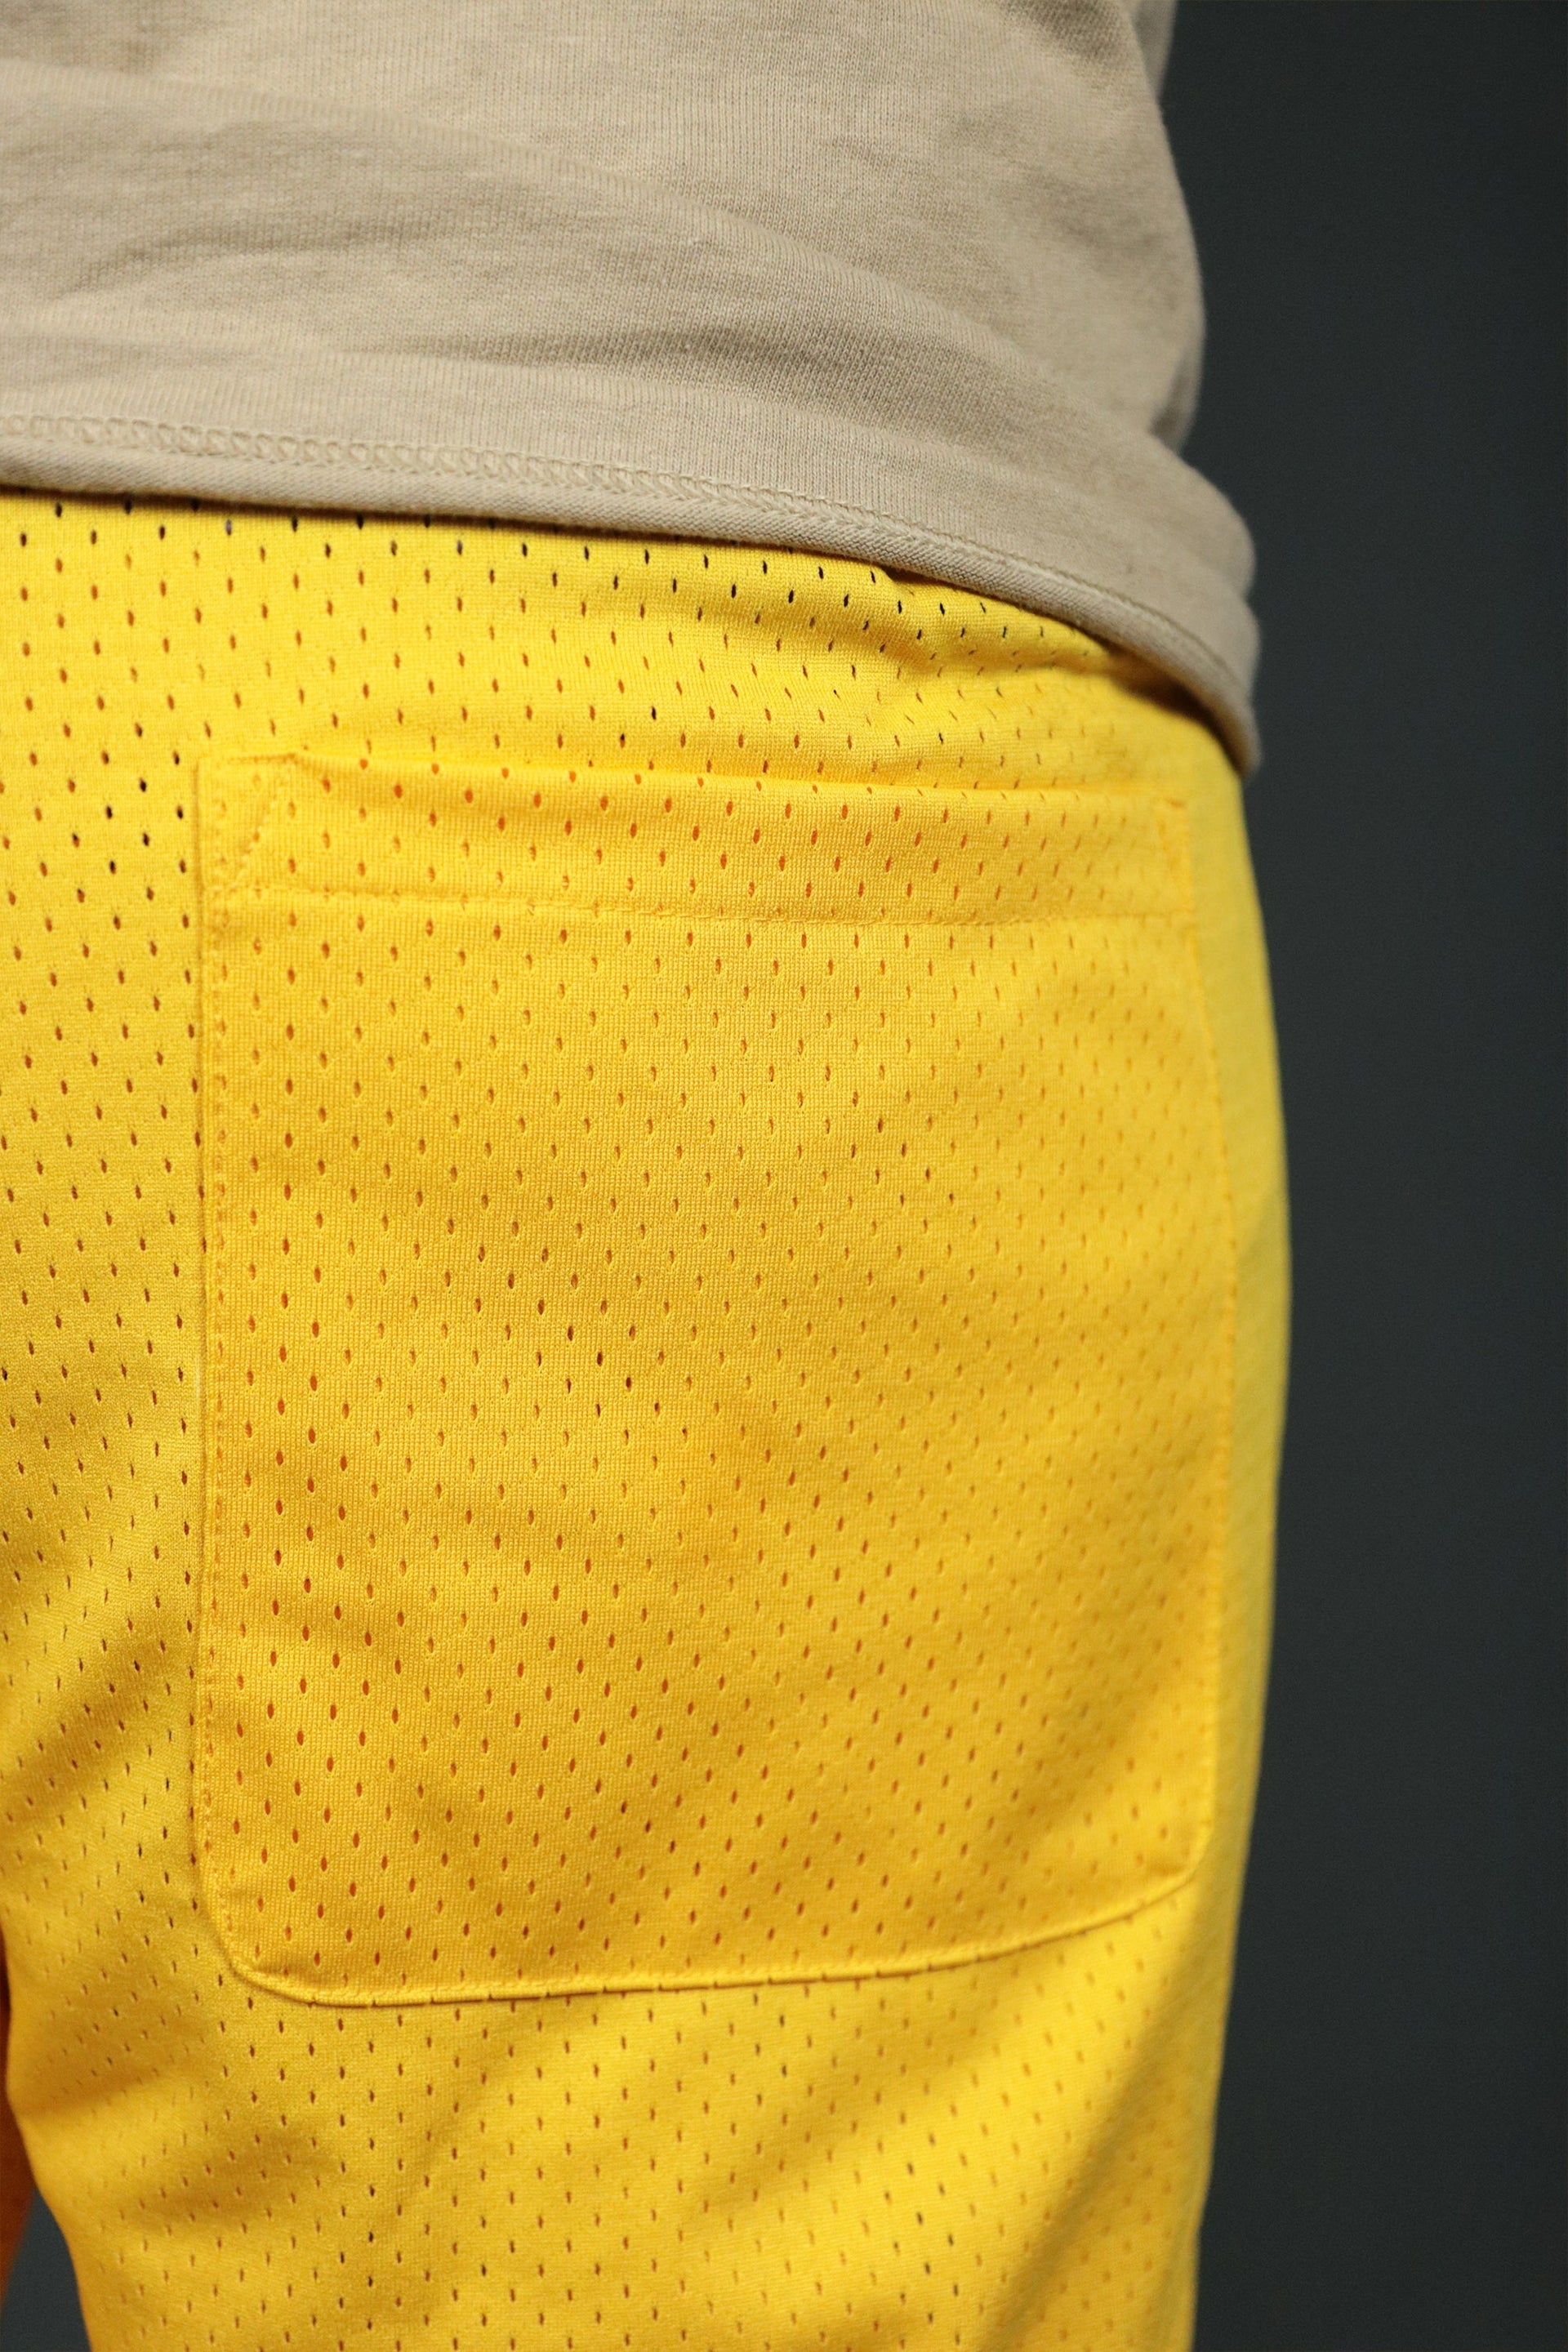 The back pocket of the yellow Los Angeles mesh basketball shorts by Jordan Craig.